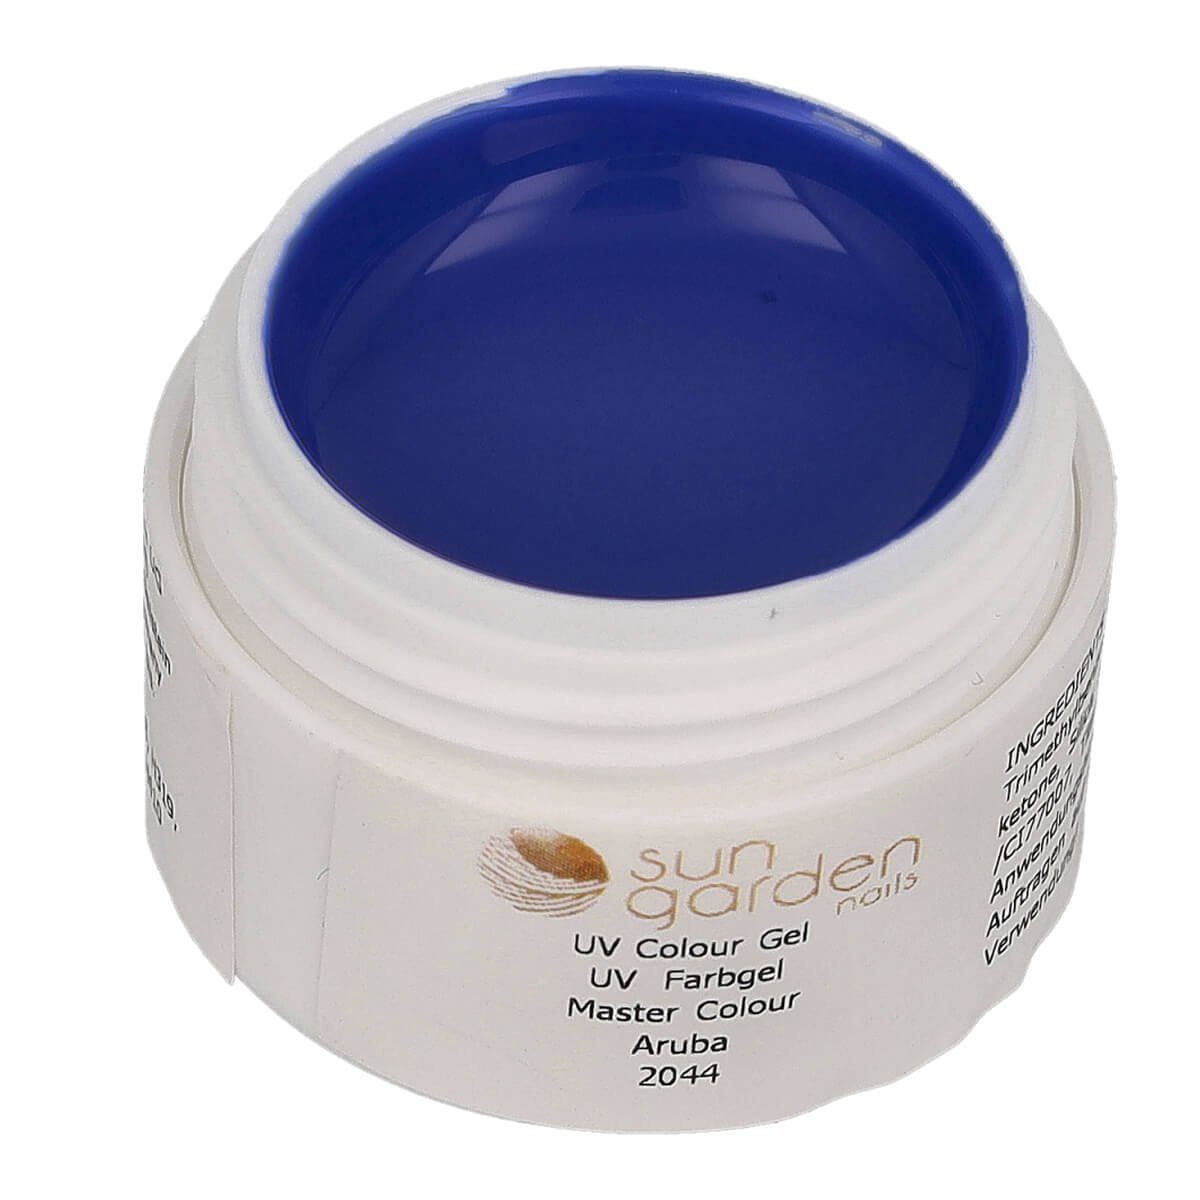 Sun Garden Nails UV-Gel Master Color - Supreme Line N°2044 Aruba 5 ml - UV Color Gel